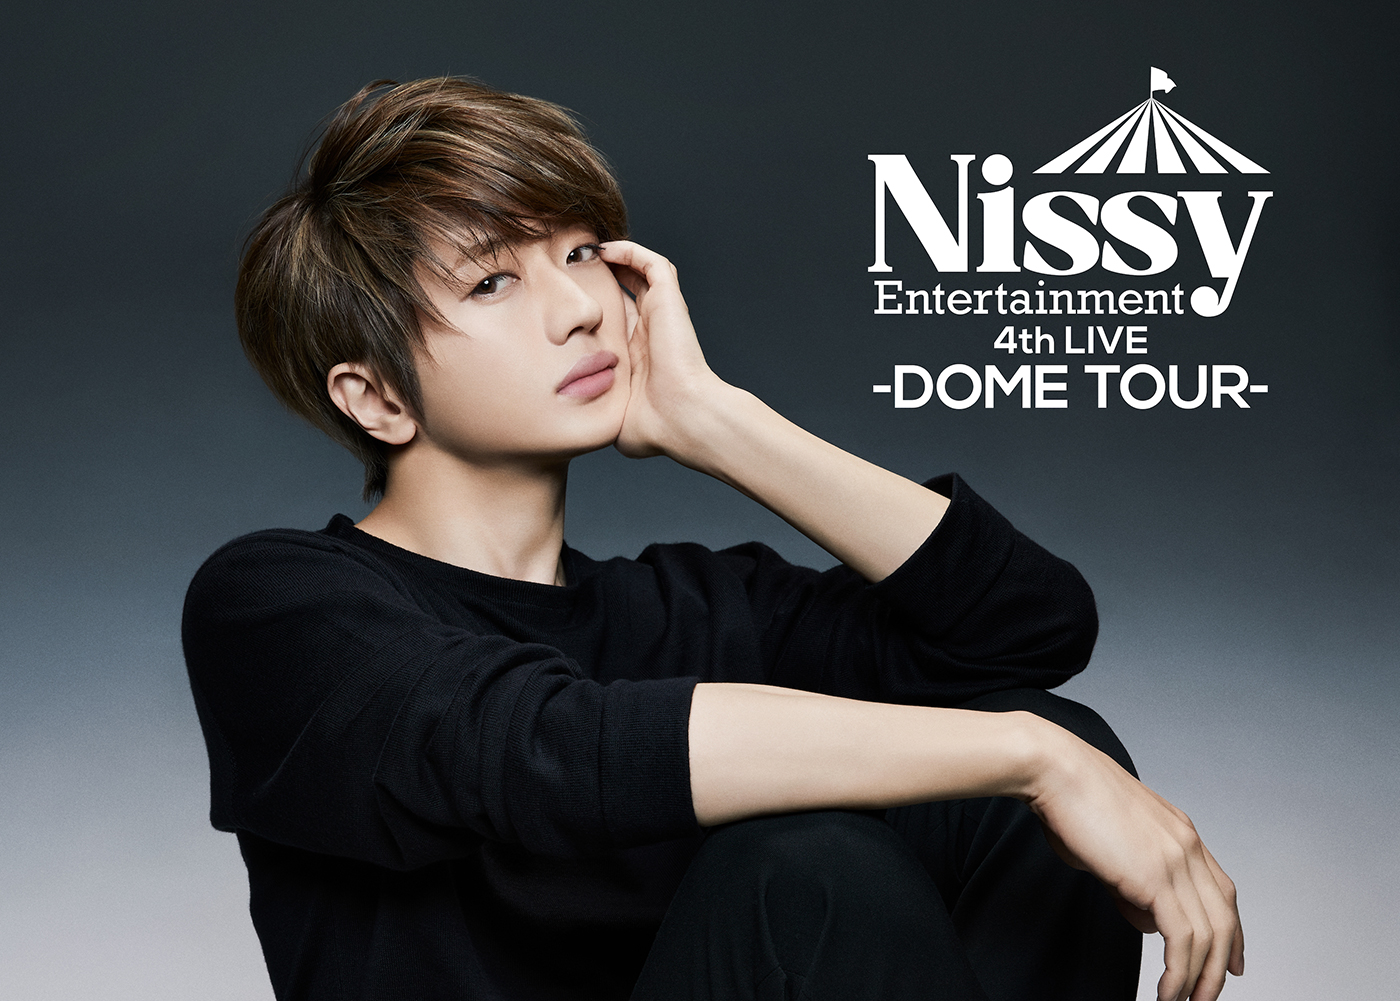 Nissy Entertainment 4th LIVE-DOME TOUR-唯一無二の“NissyEnte